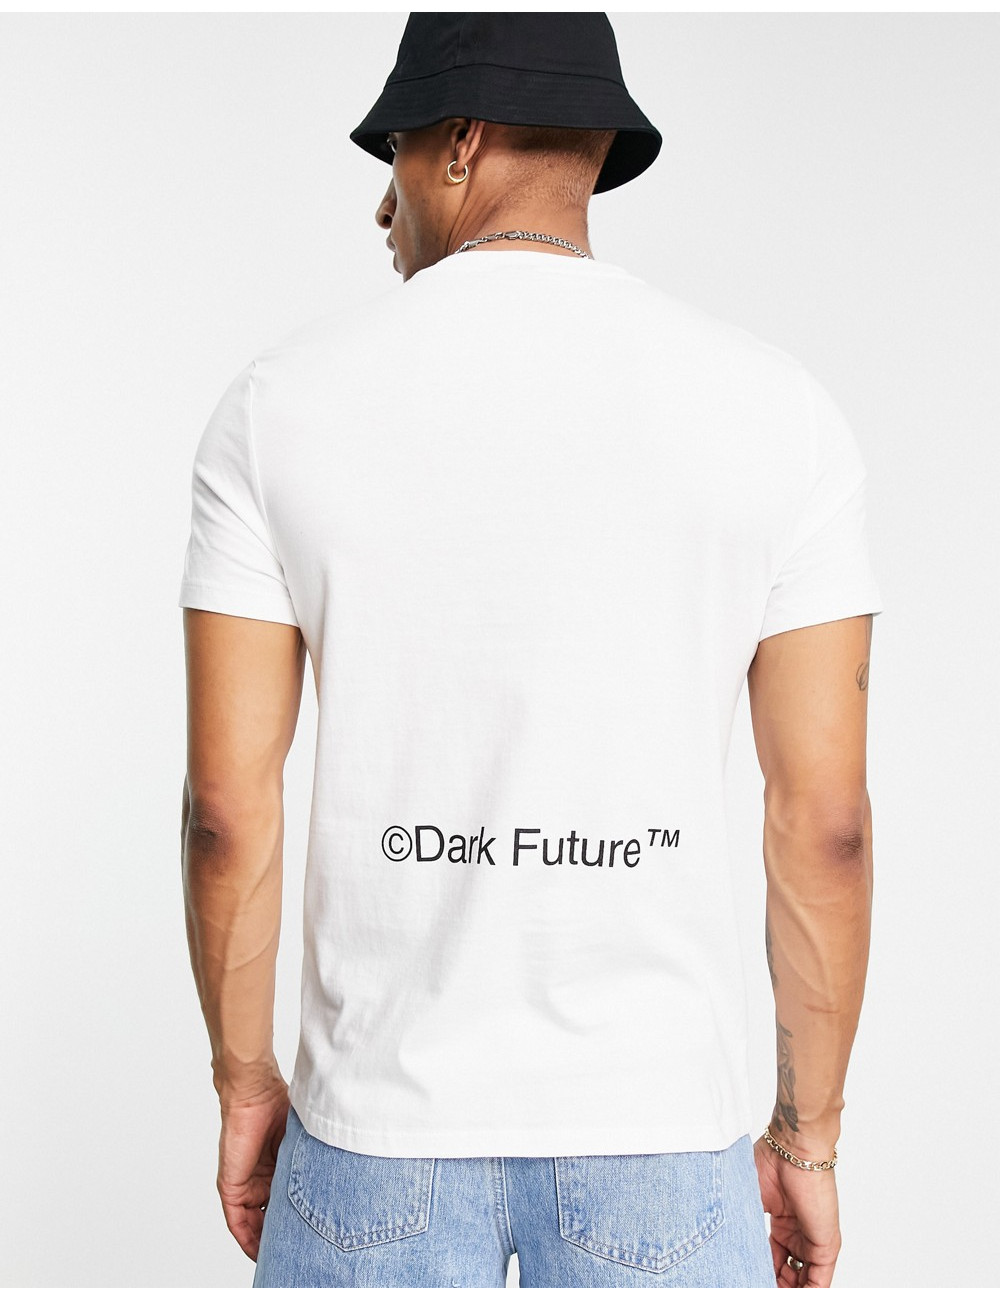 ASOS Dark Future t-shirt...